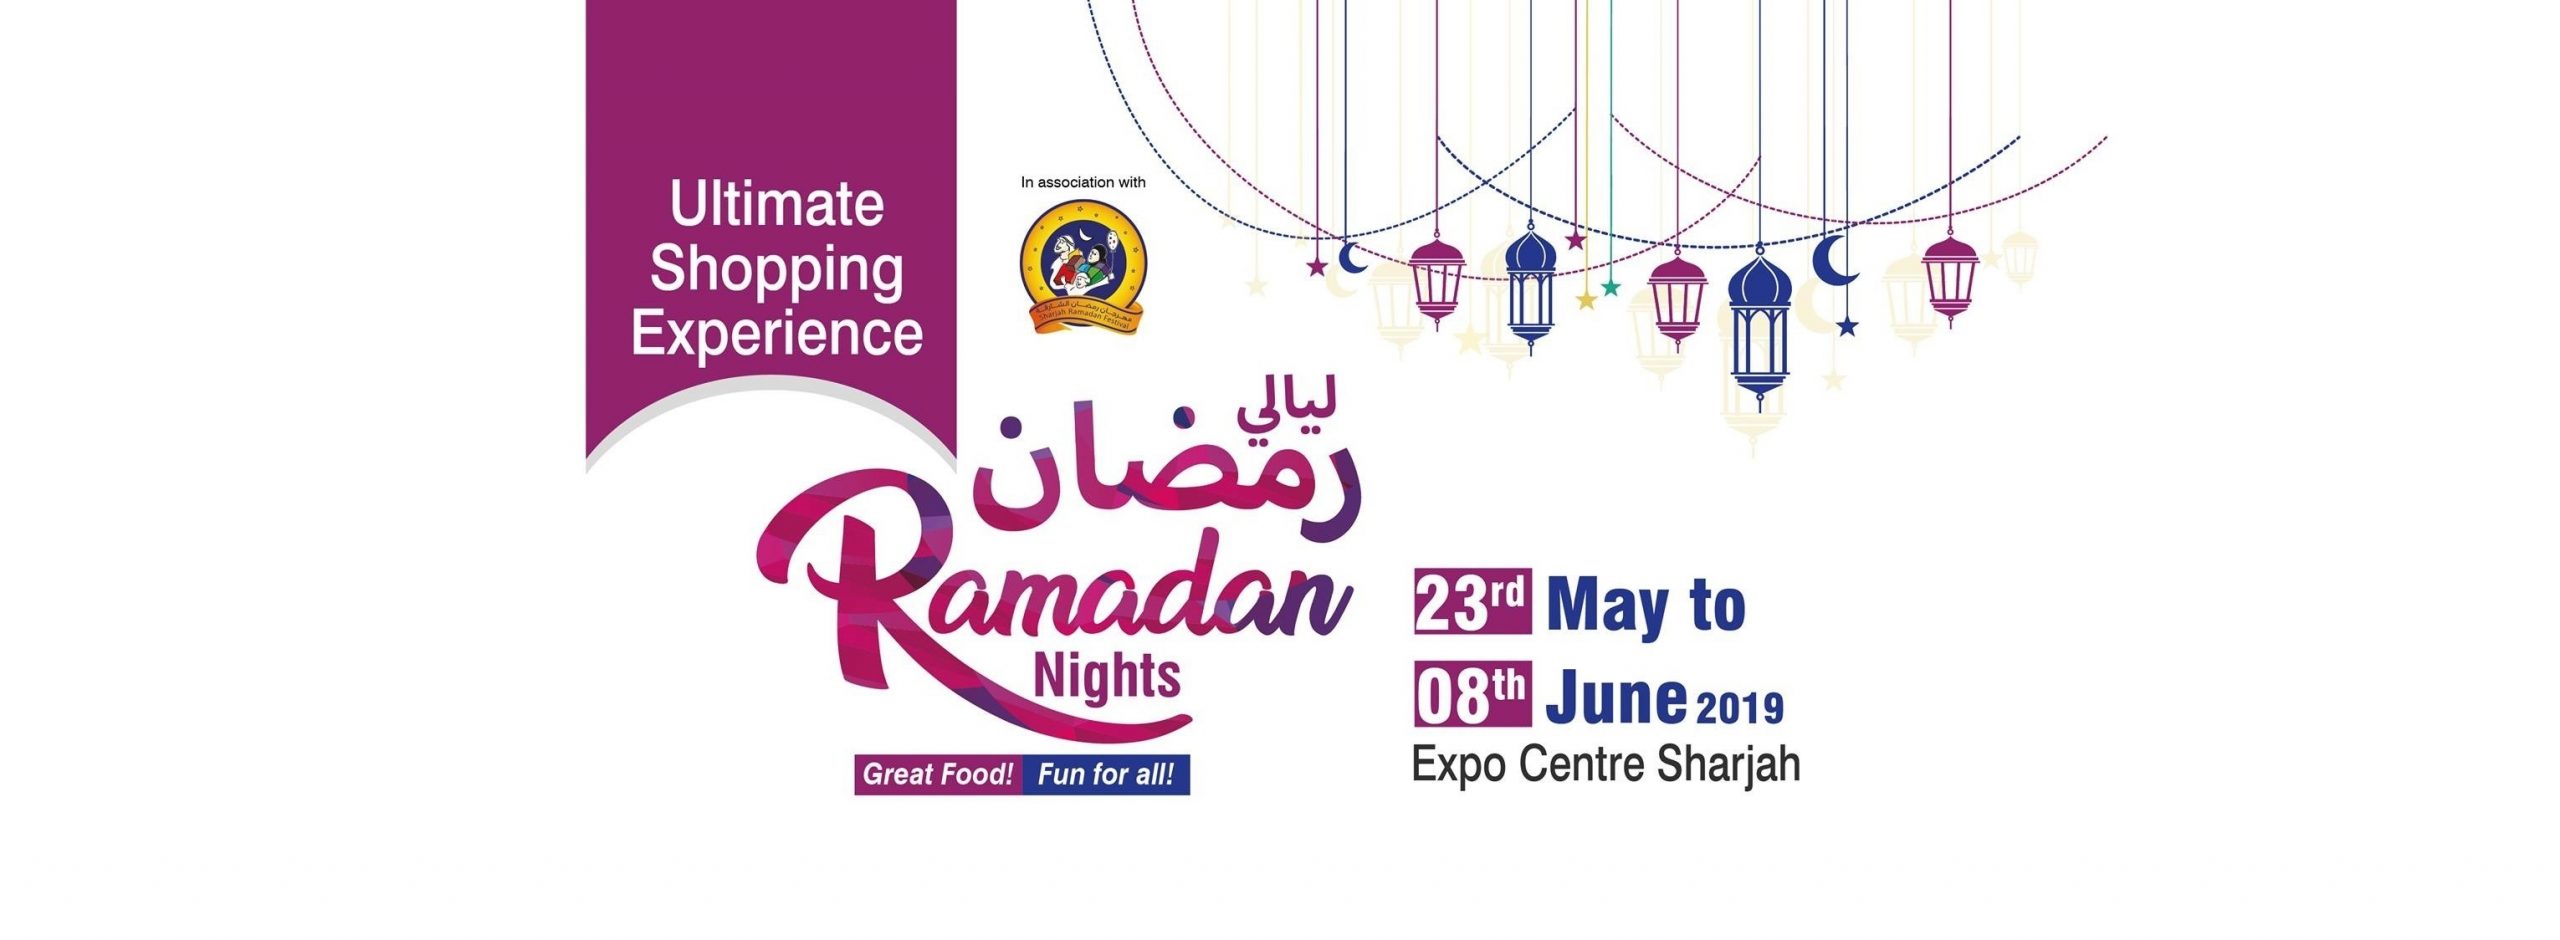 Expo Centre Sharjah: Ramadan Nights 2019 - Coming Soon in UAE